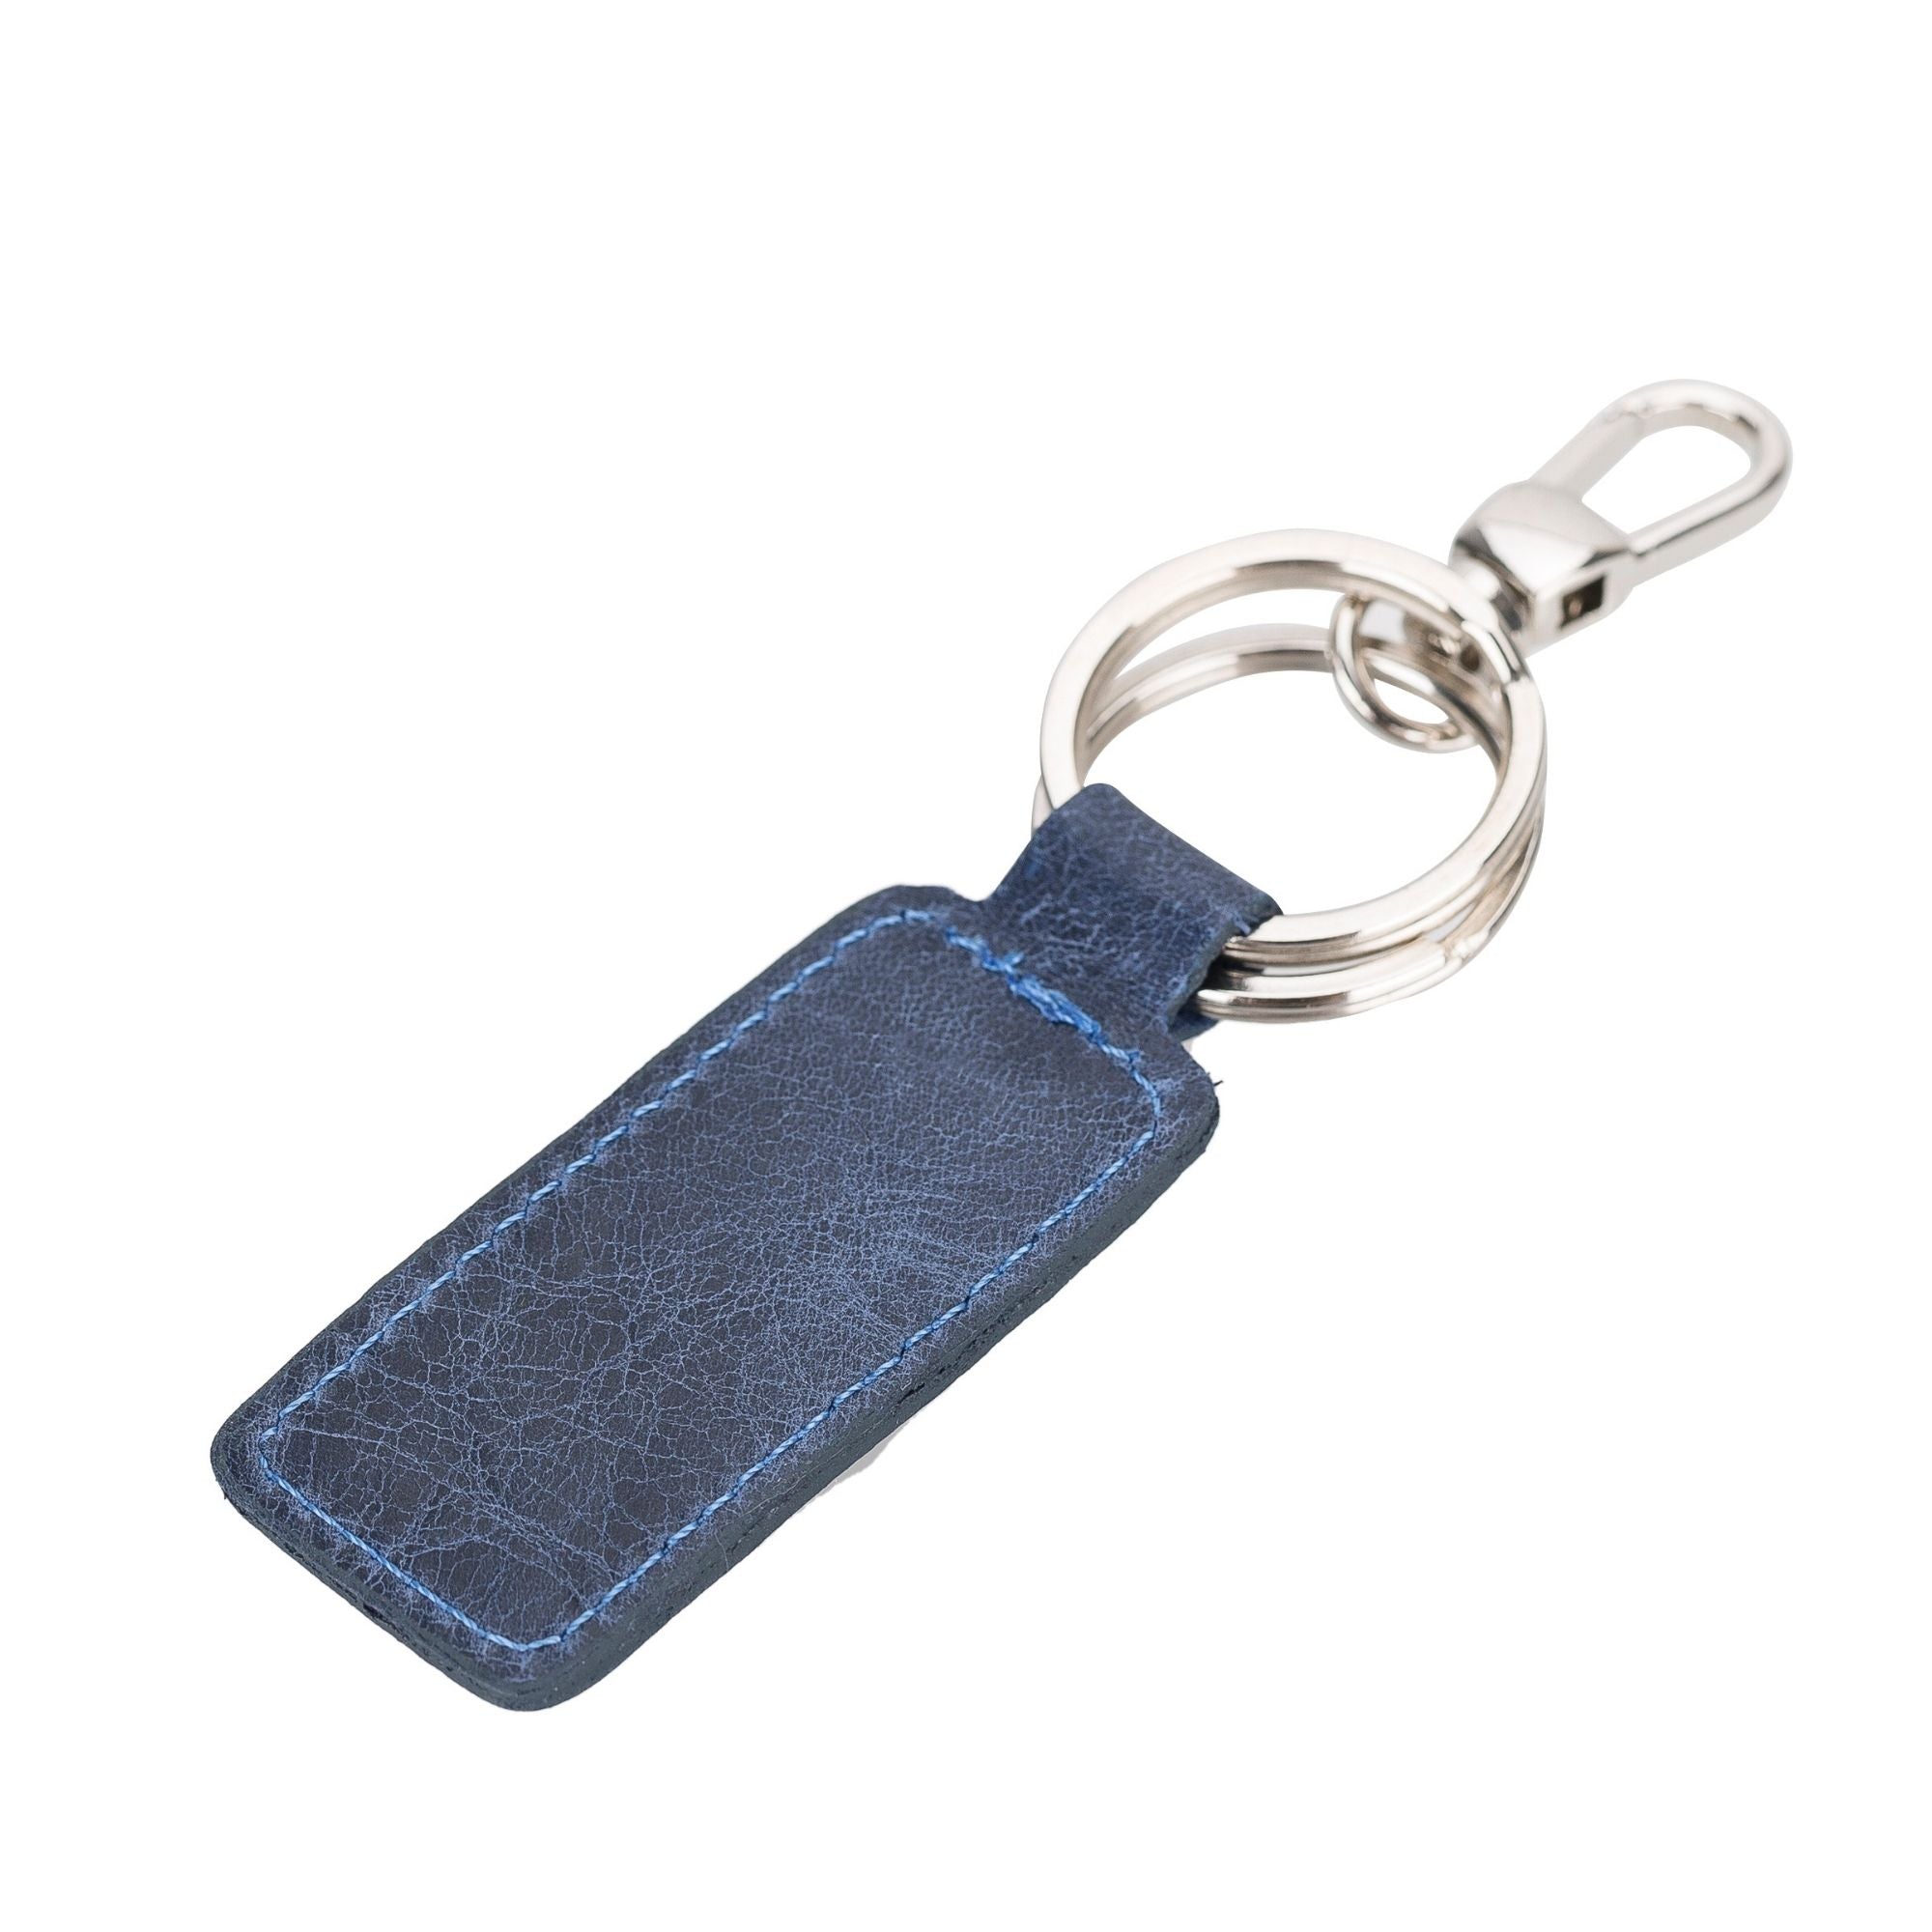 Thermopolis Handmade Genuine Leather Keychains - Dark Blue - TORONATA